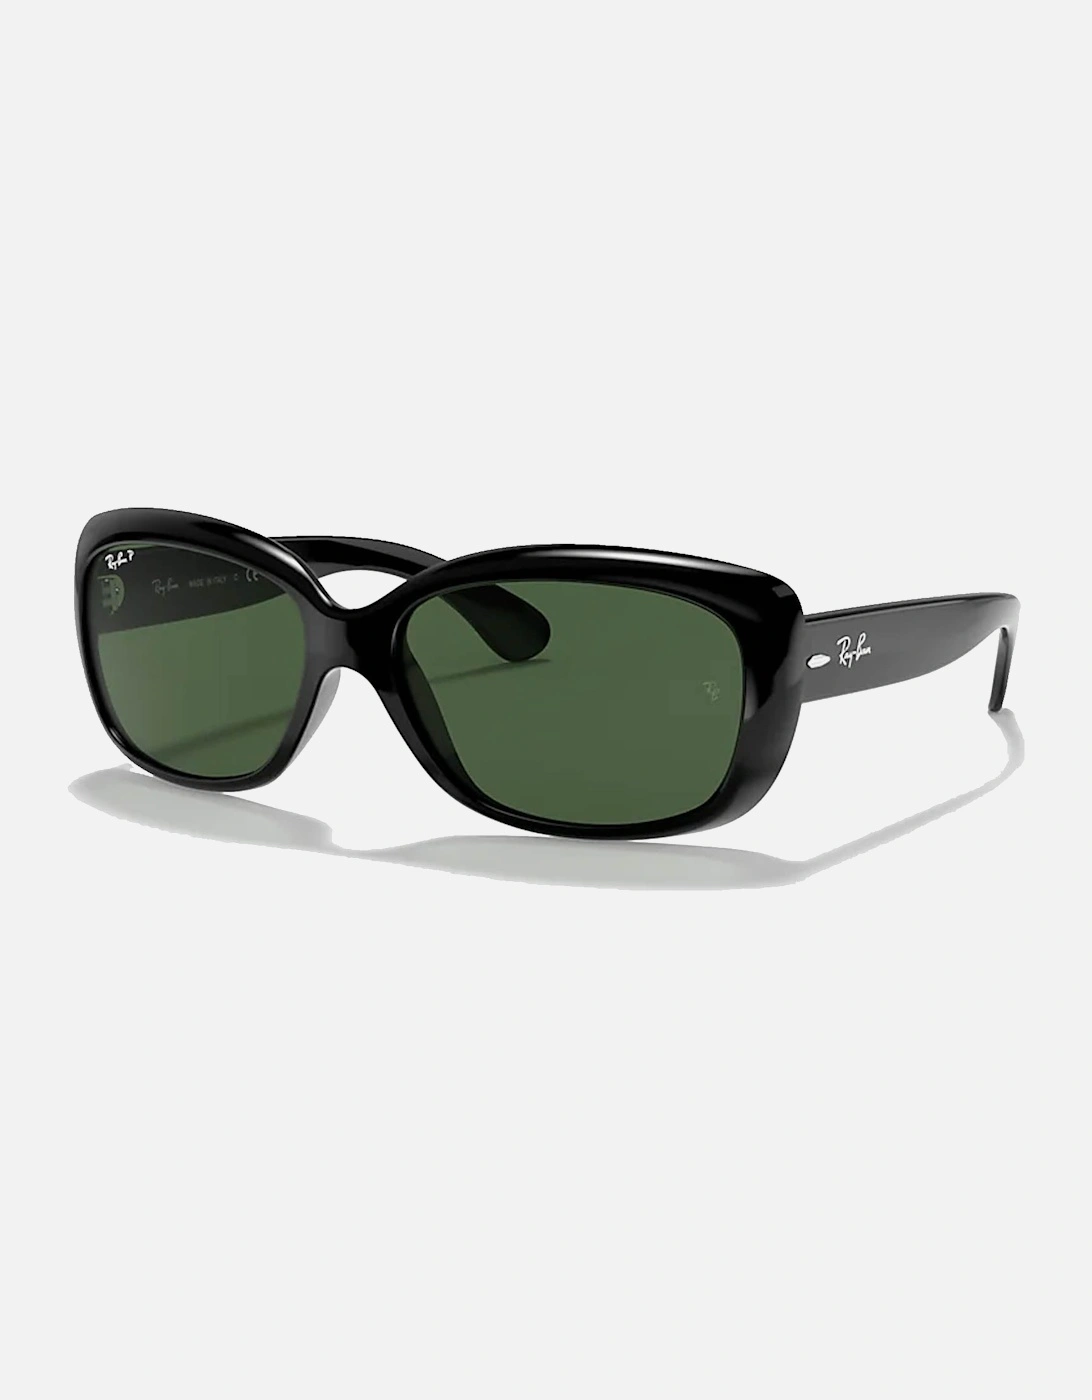 Bylon Woman Sunglasses - Dark Green